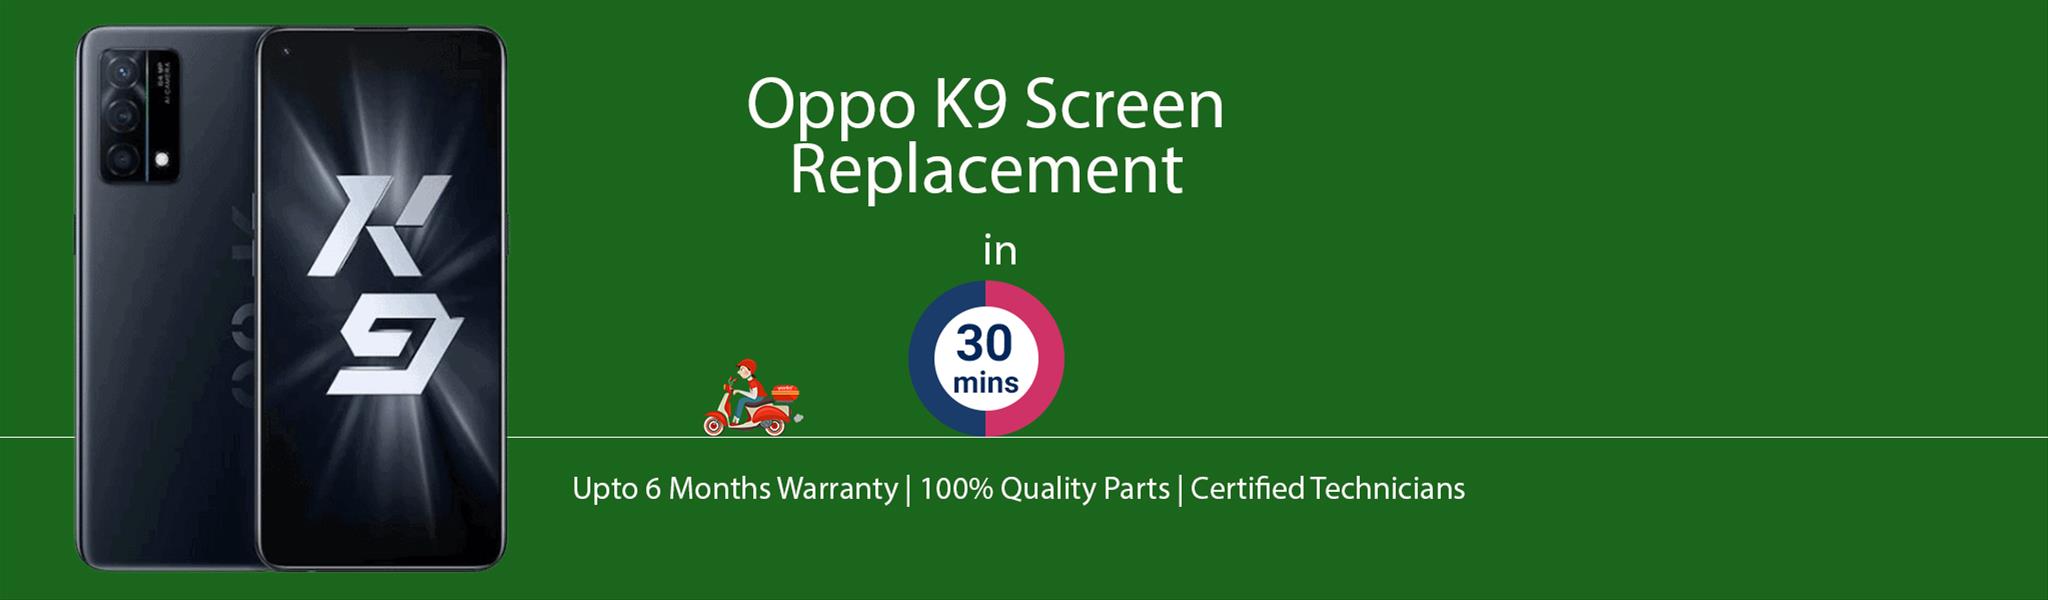 oppo-k9-screen-replacement.jpg